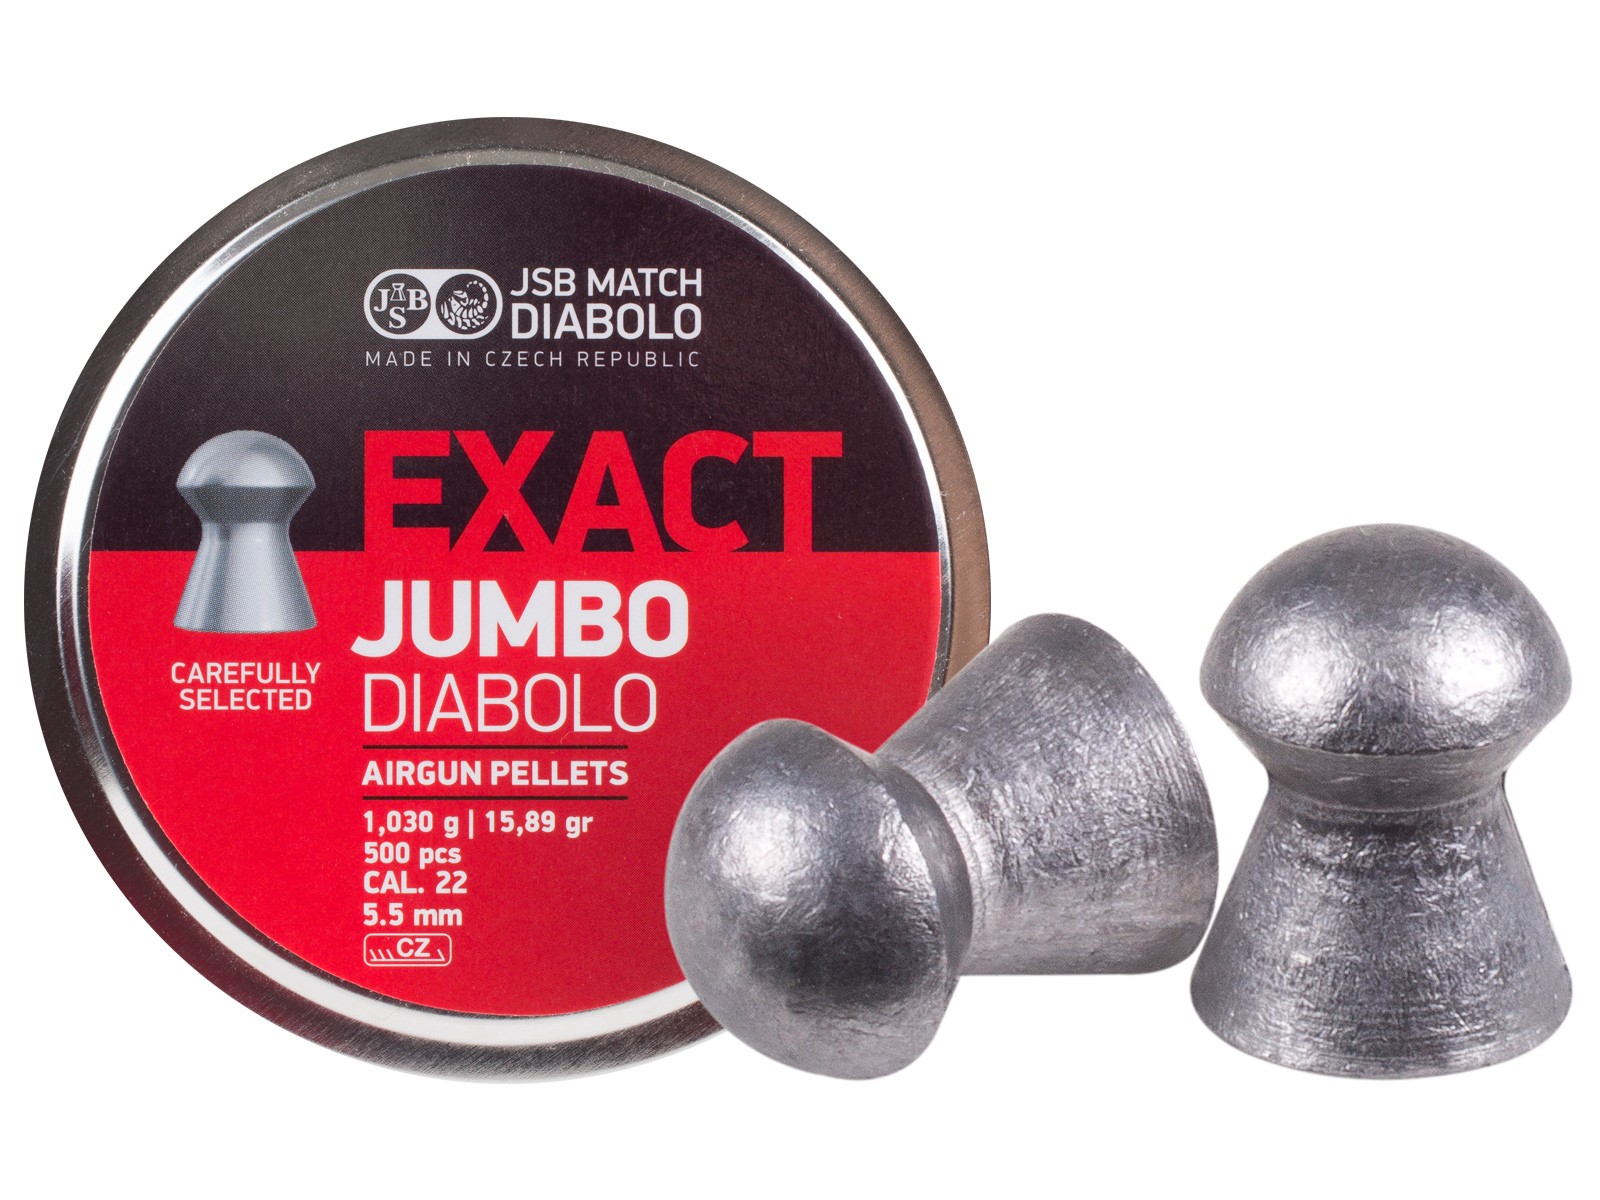 JSB Diabolo Exact Jumbo .22 Cal, 15.89 Grains, Domed, 500ct 0.22